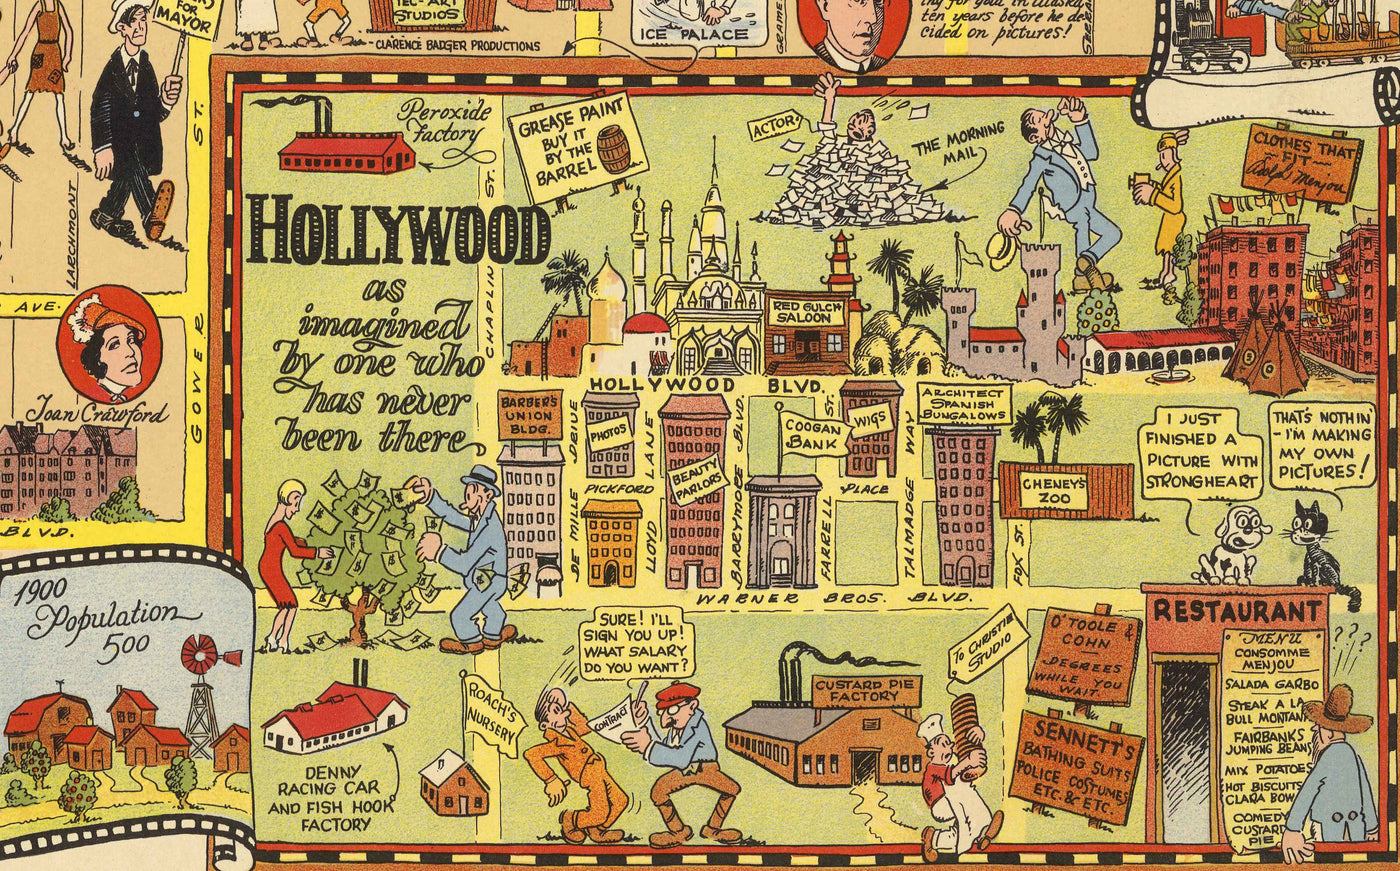 Old Map of Golden Era Hollywood, 1928 by Harrison Godwin - Charlie Chaplin, Greta Garbo, Movie Stars & Studios